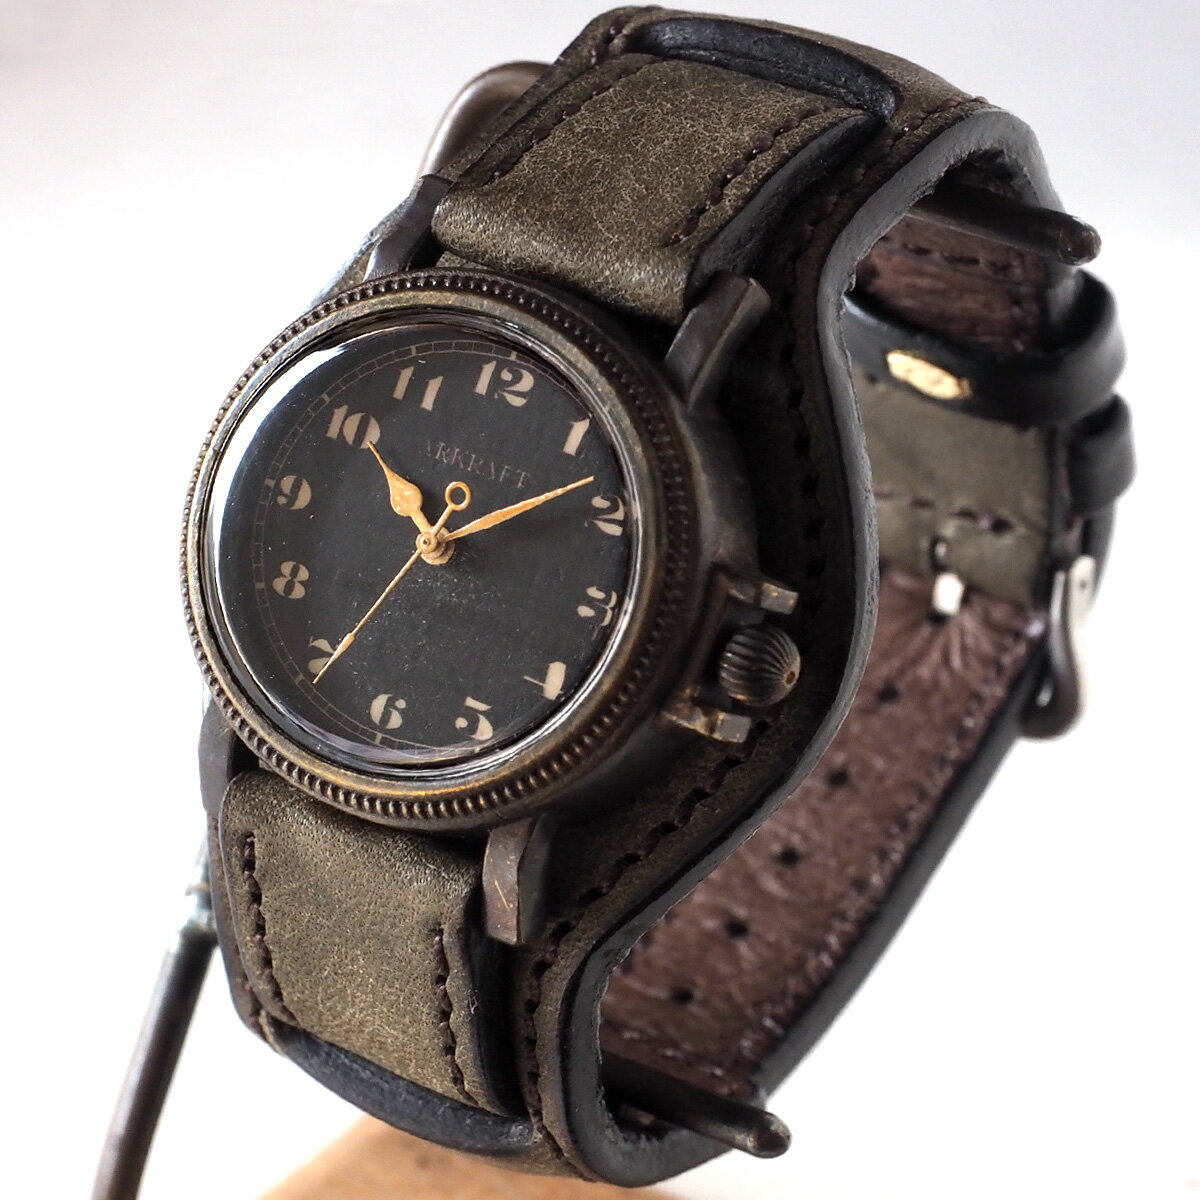 ARKRAFT アークラフト 手作り腕時計“Nes Medium” アラビア数字 プレミアムWストラップ [AR-C-026-AR] 時計作家 新木秀和 ハンドメイド ウォッチ ハンドメイド腕時計 手作り時計 本革 二重ベル…